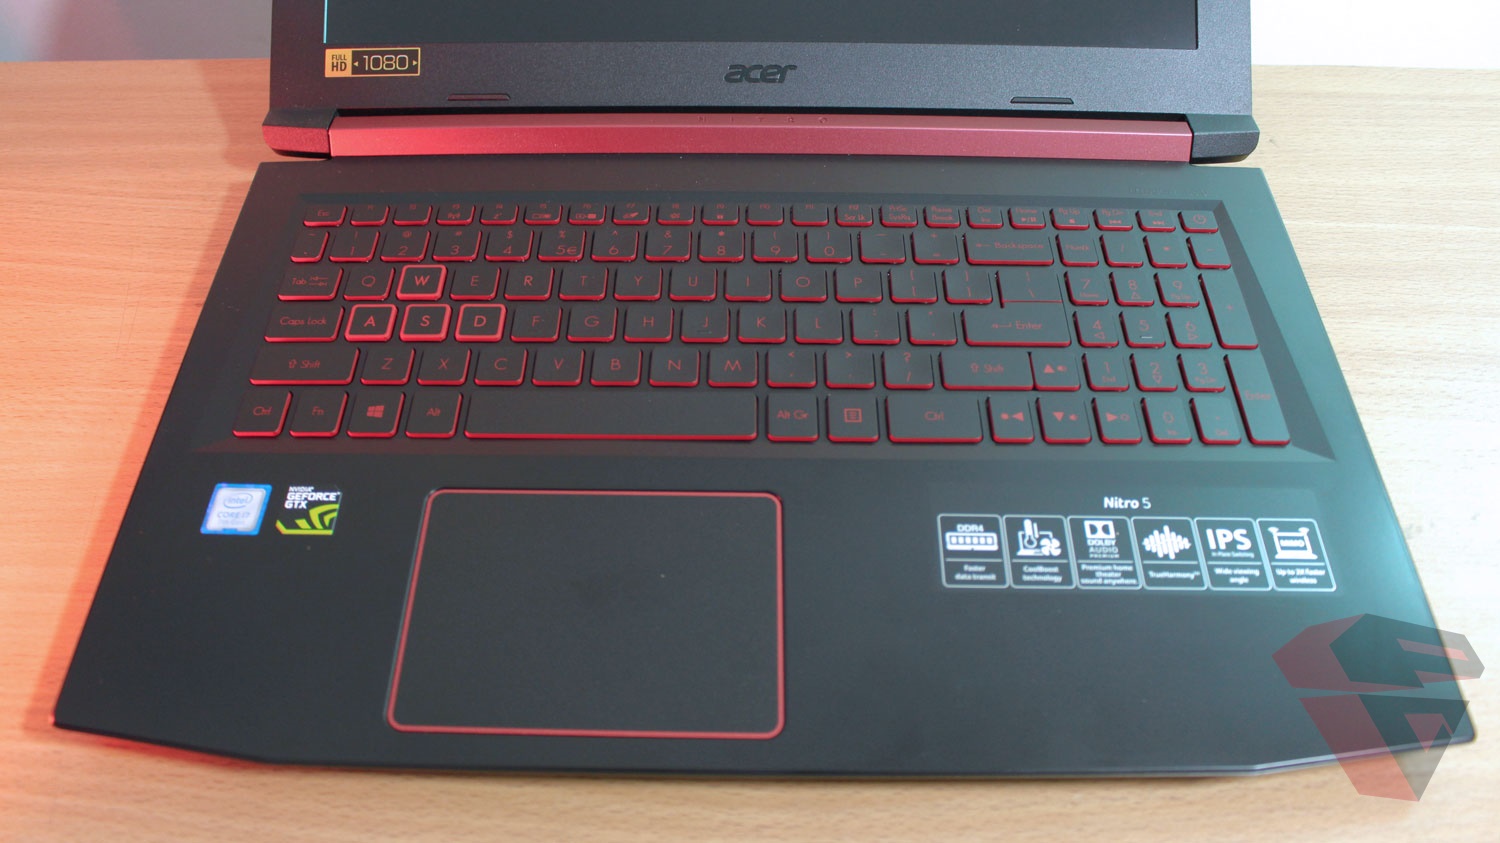 Nitro 5 экран. Acer Intro 5. Эйсер нитро 5 2022 года. Асер нитро с арабской клавиатурой. Рабочий стол Асер нитро 5.